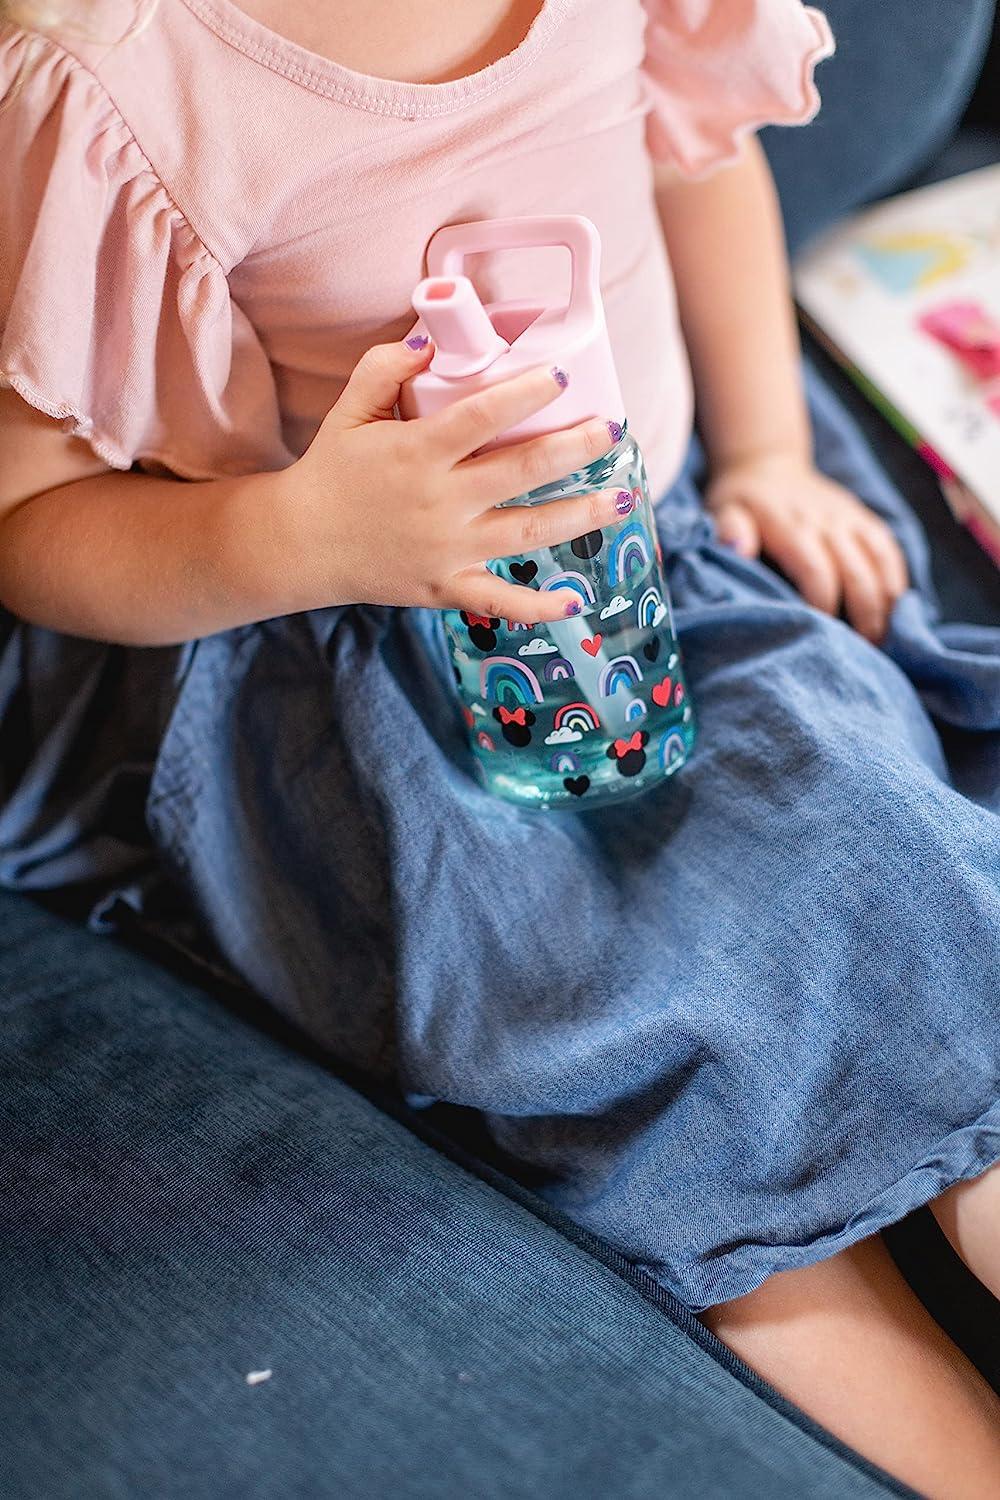 Simple Modern Kids Water Bottle Plastic BPA-Free Tritan Cup with Leak Proof  Straw Lid